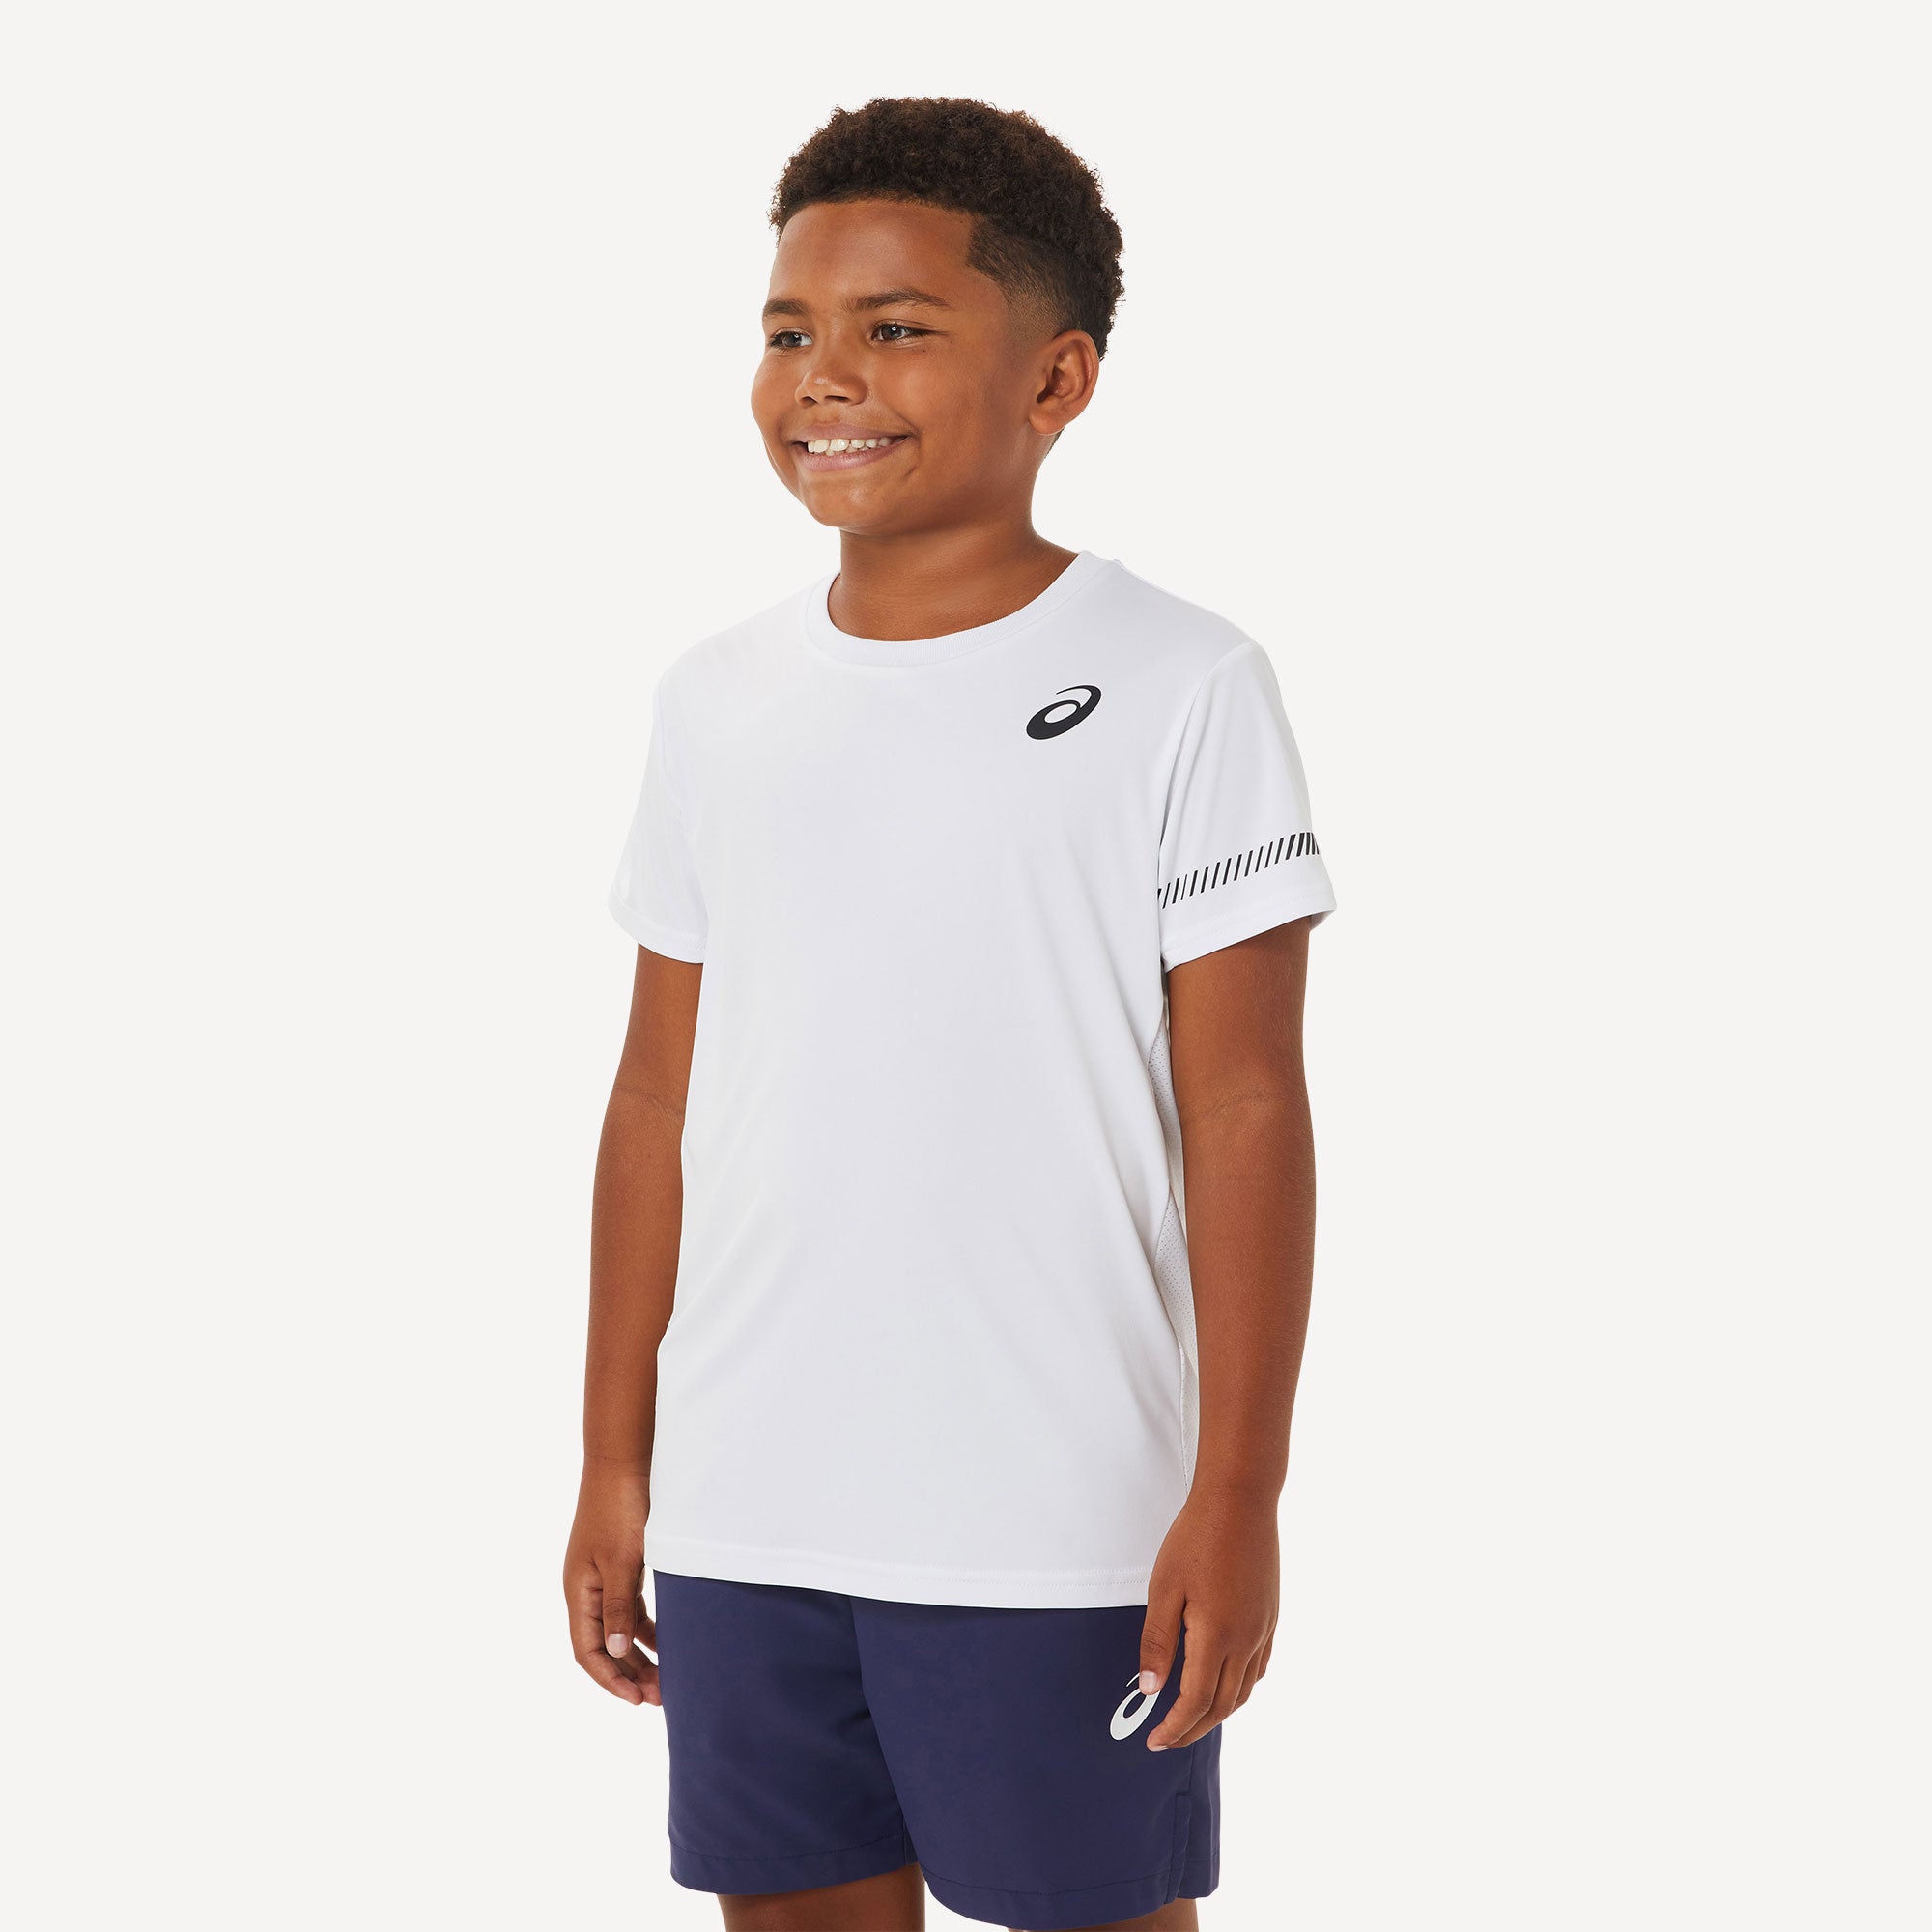 ASICS Boys' Tennis Shirt White (3)